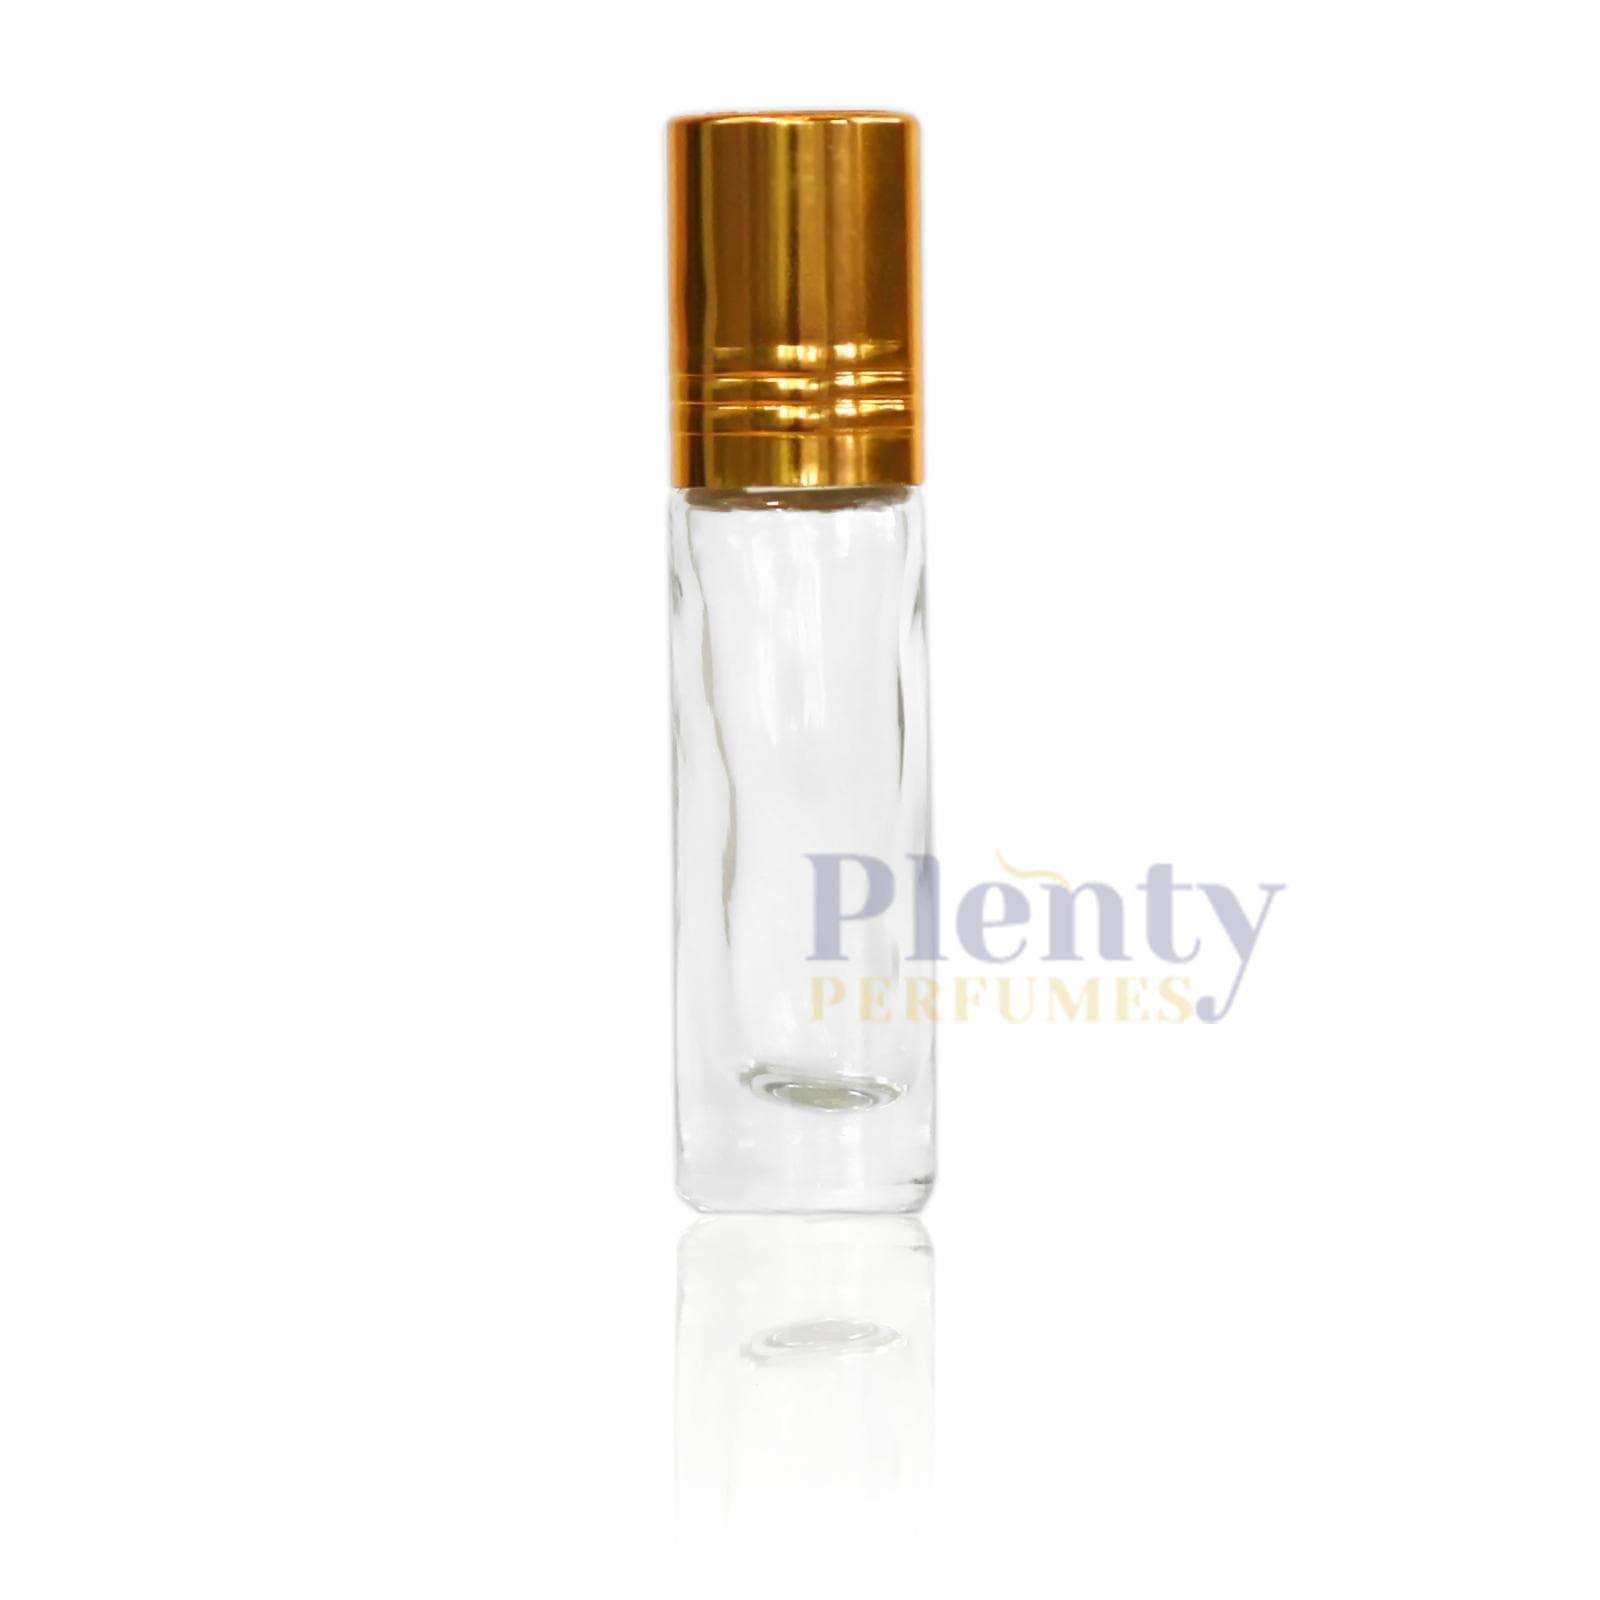 Perfume Oil Blacks XS - Plenty Perfumes